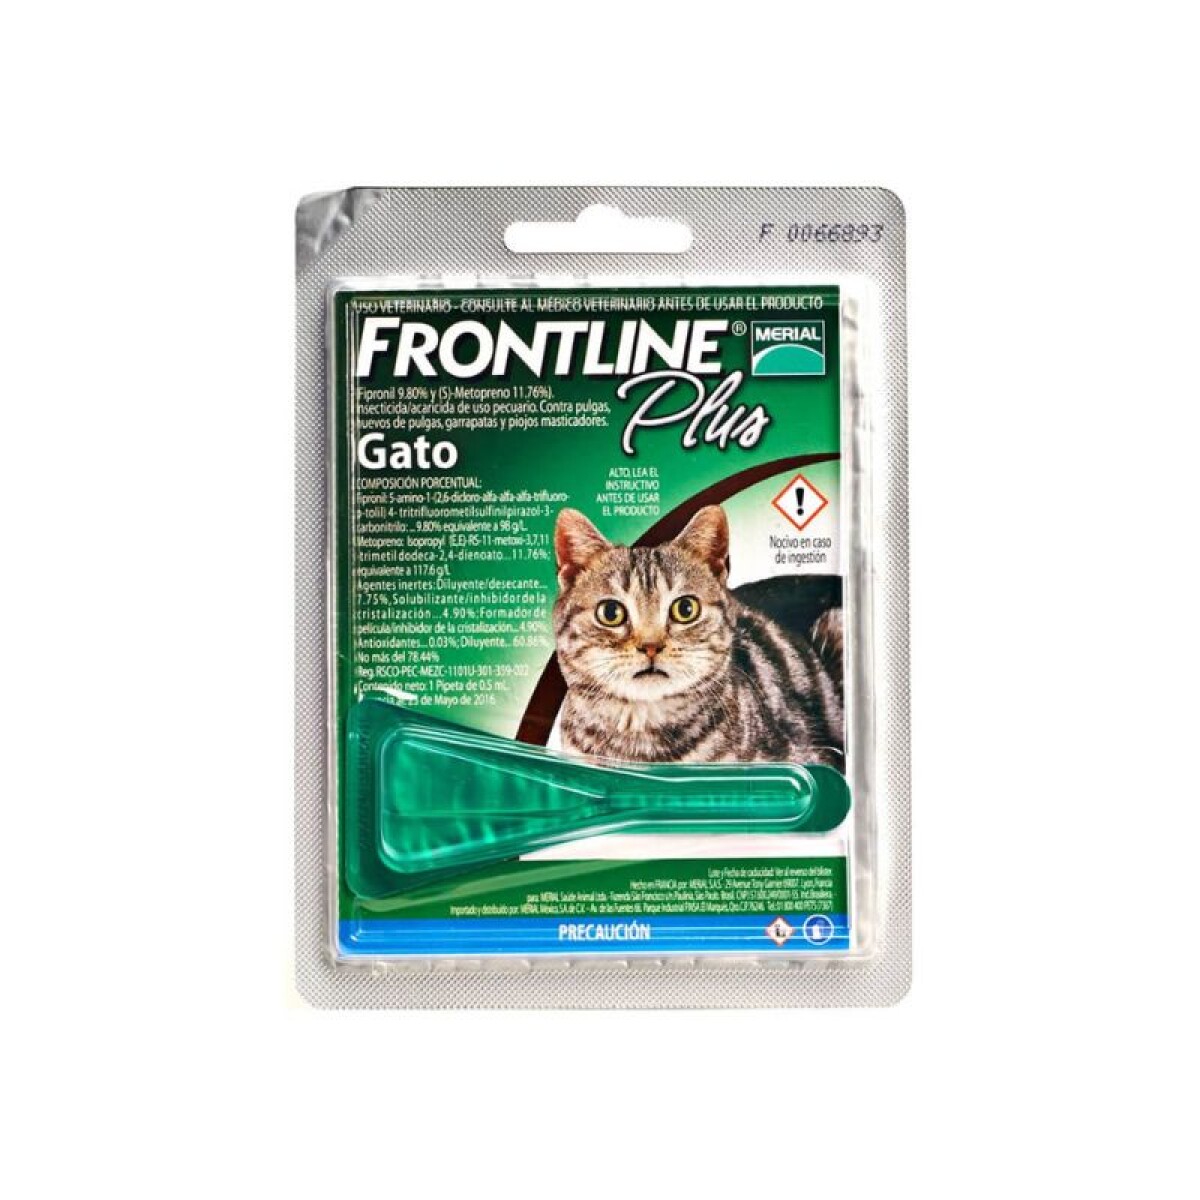 FRONTLINE PLUS GATO - Frontline Plus Gato 